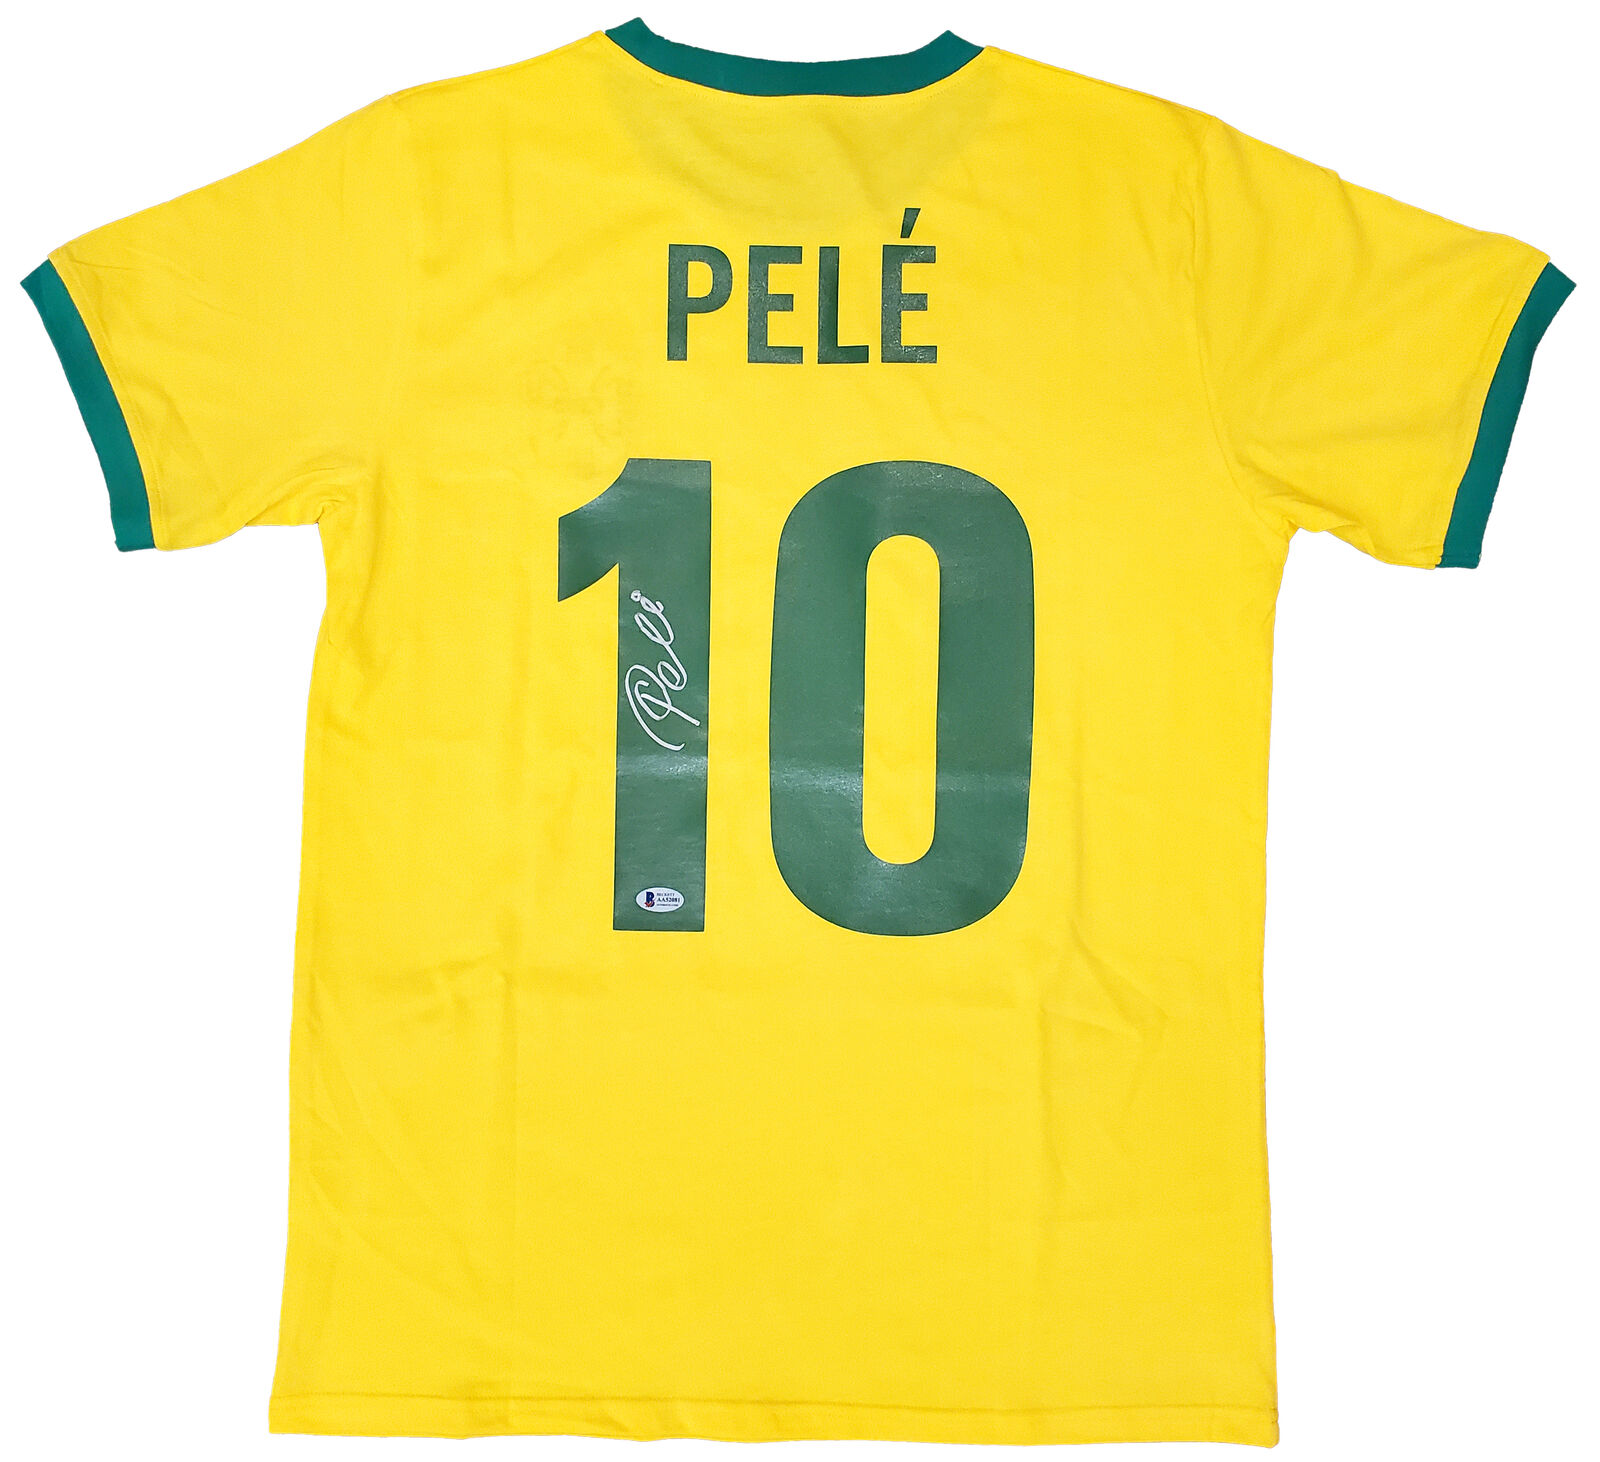 Cbd Brazil Pele Autographed Signed Yellow Jersey Beckett Bas Stock #194362